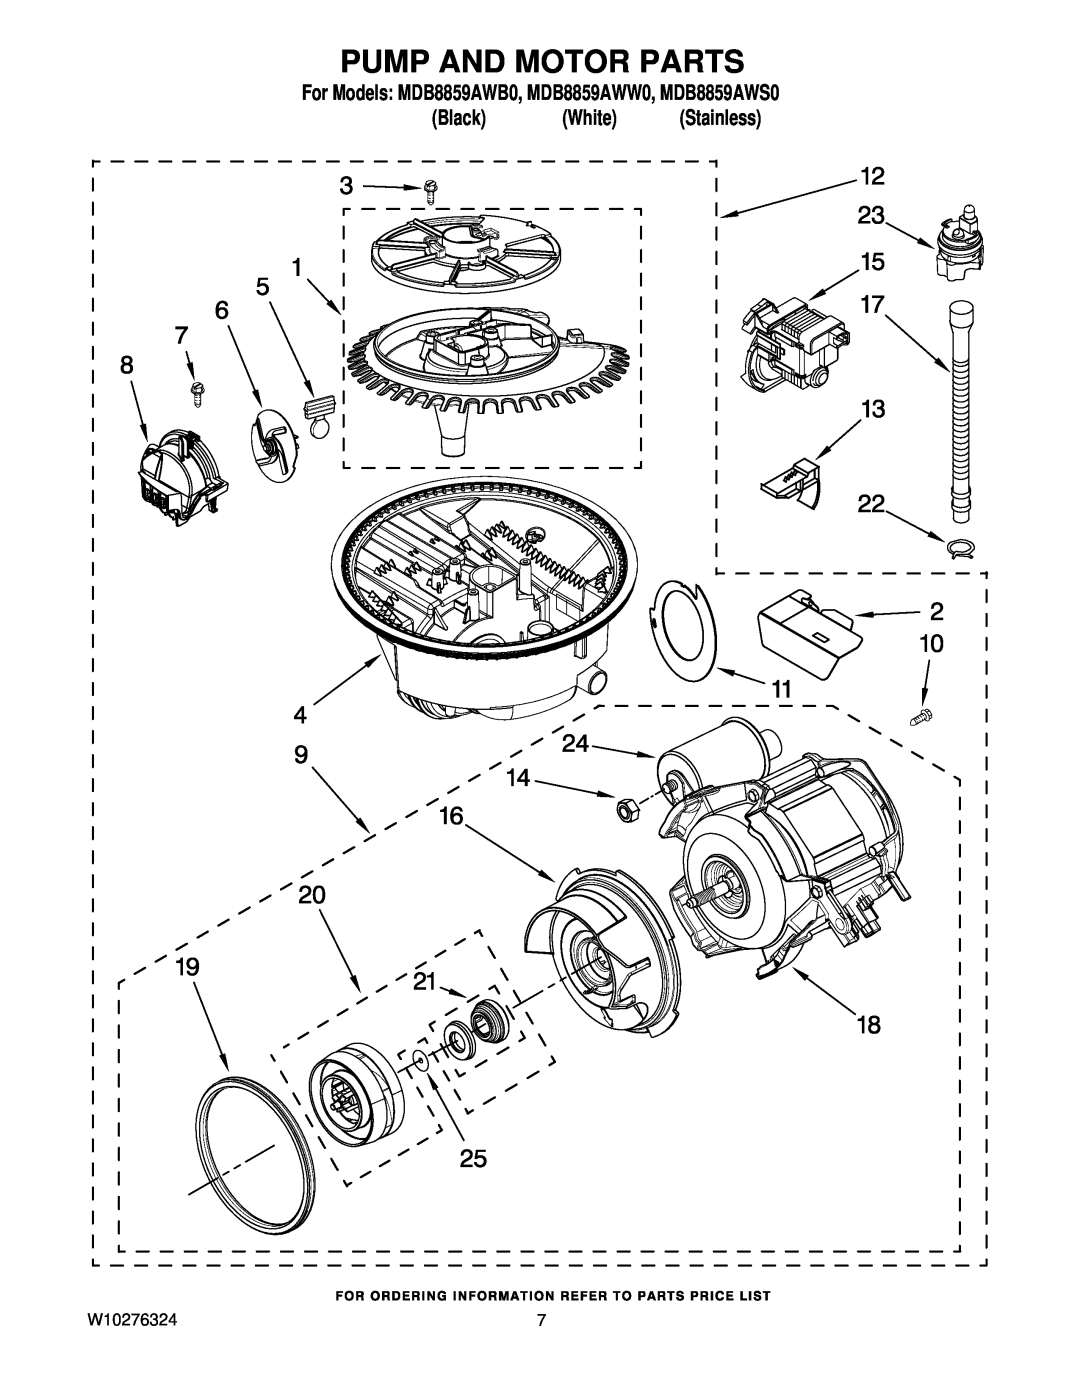 Maytag manual Pump And Motor Parts, For Models MDB8859AWB0, MDB8859AWW0, MDB8859AWS0, Black White Stainless 